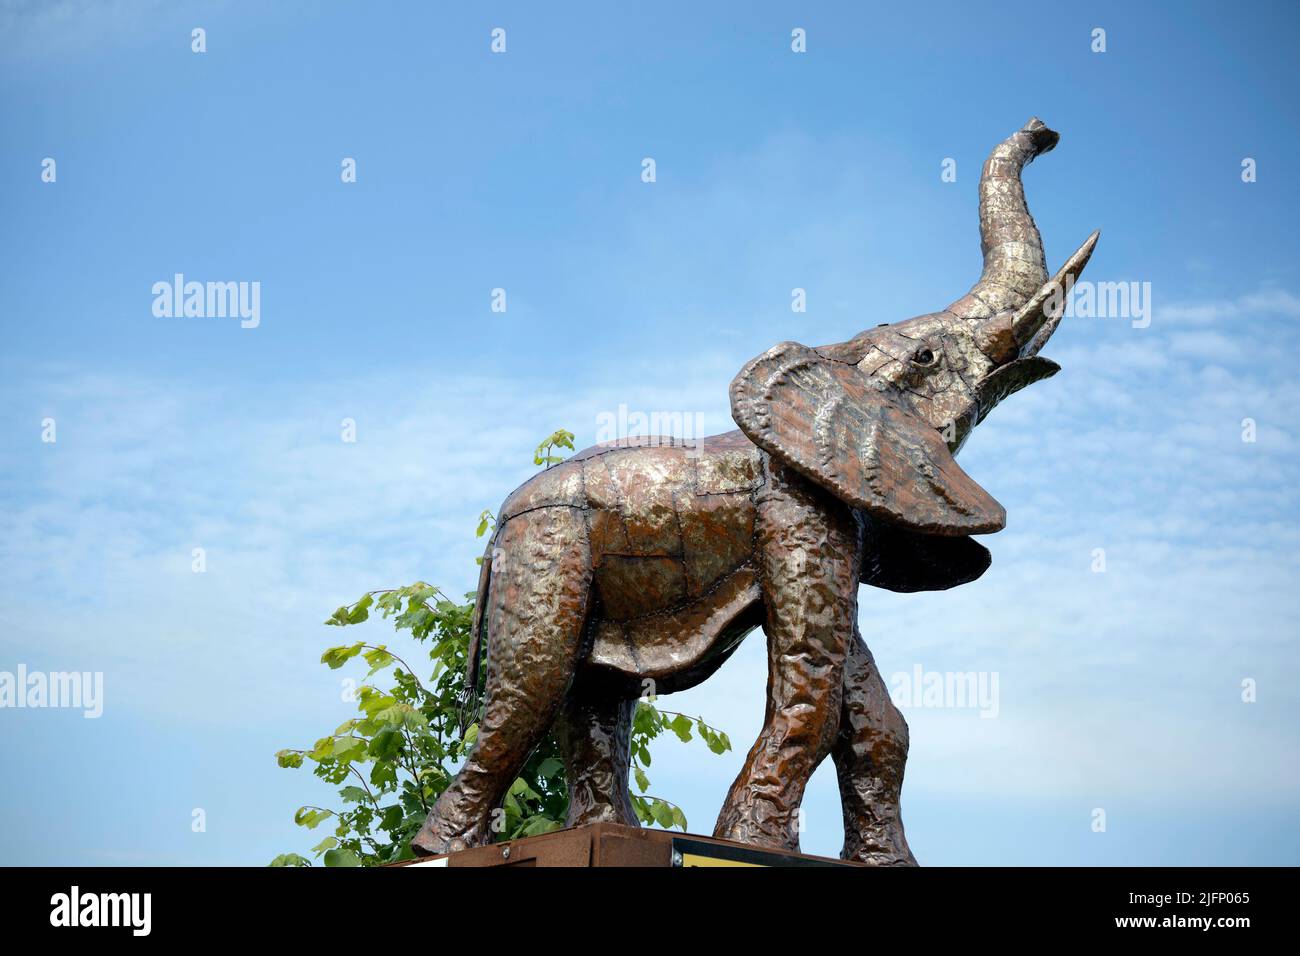 The British Ironwork Centre, Bornean Elephant Exhibit/Sculpture Stockfoto